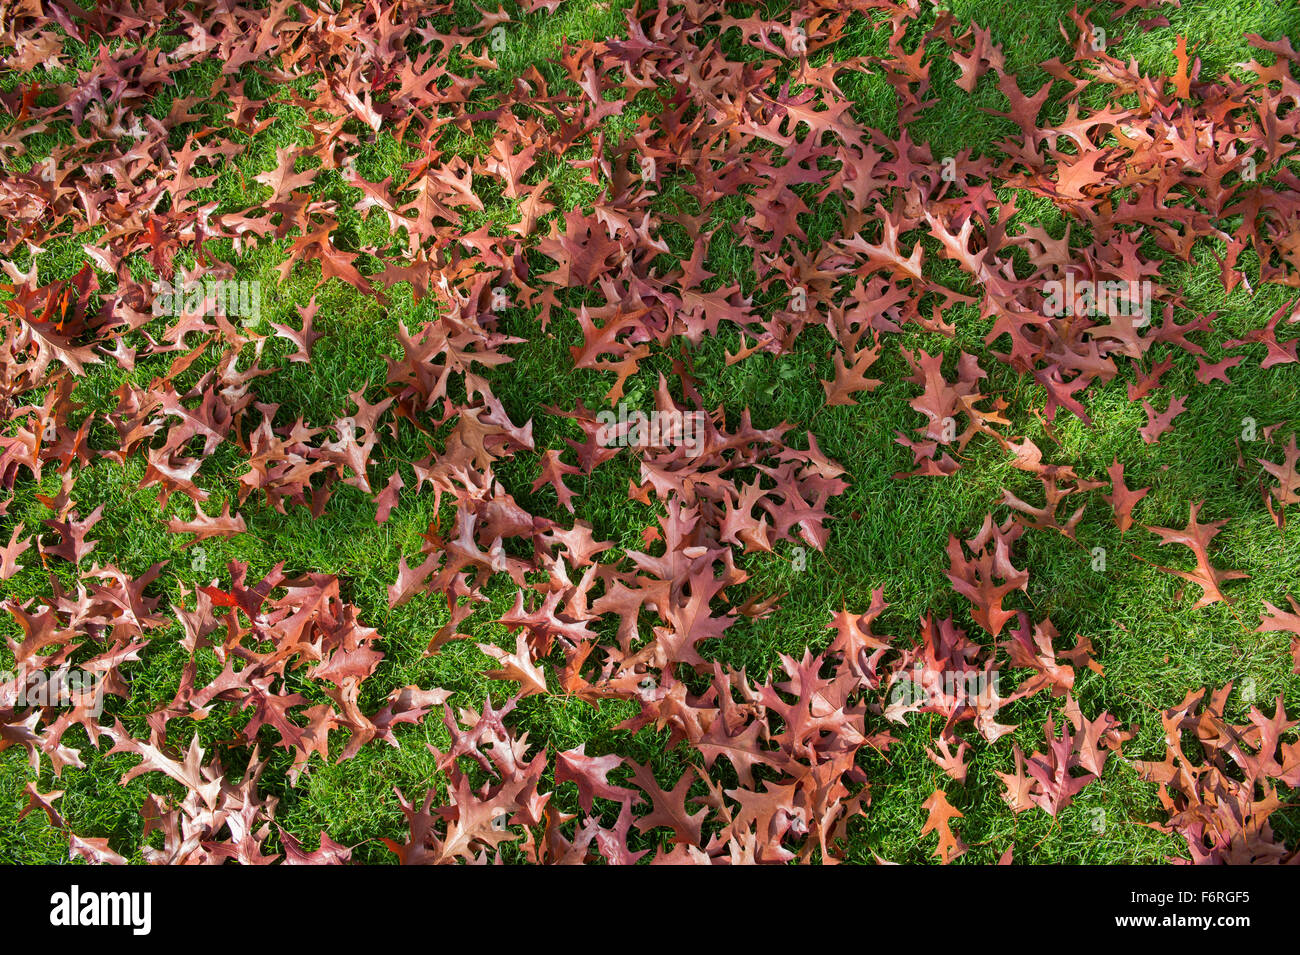 Quercus coccinea splendens. Fallen Scarlet oak tree leaves on grass in autumn. UK Stock Photo